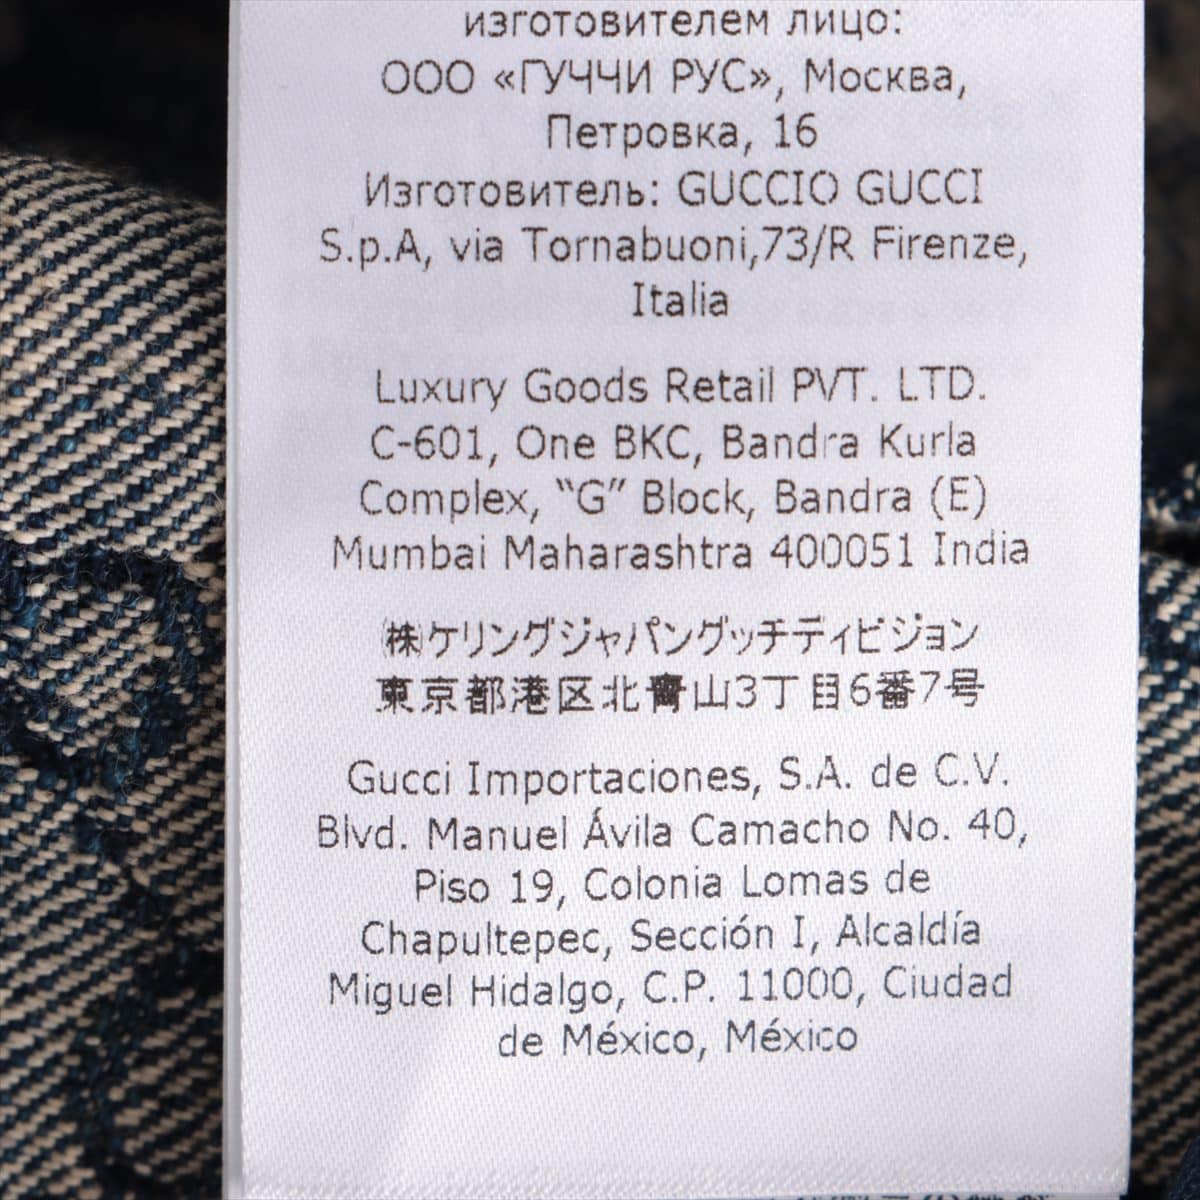 Gucci Cotton Skirt 36 Ladies' Blue  651415 GG Shima